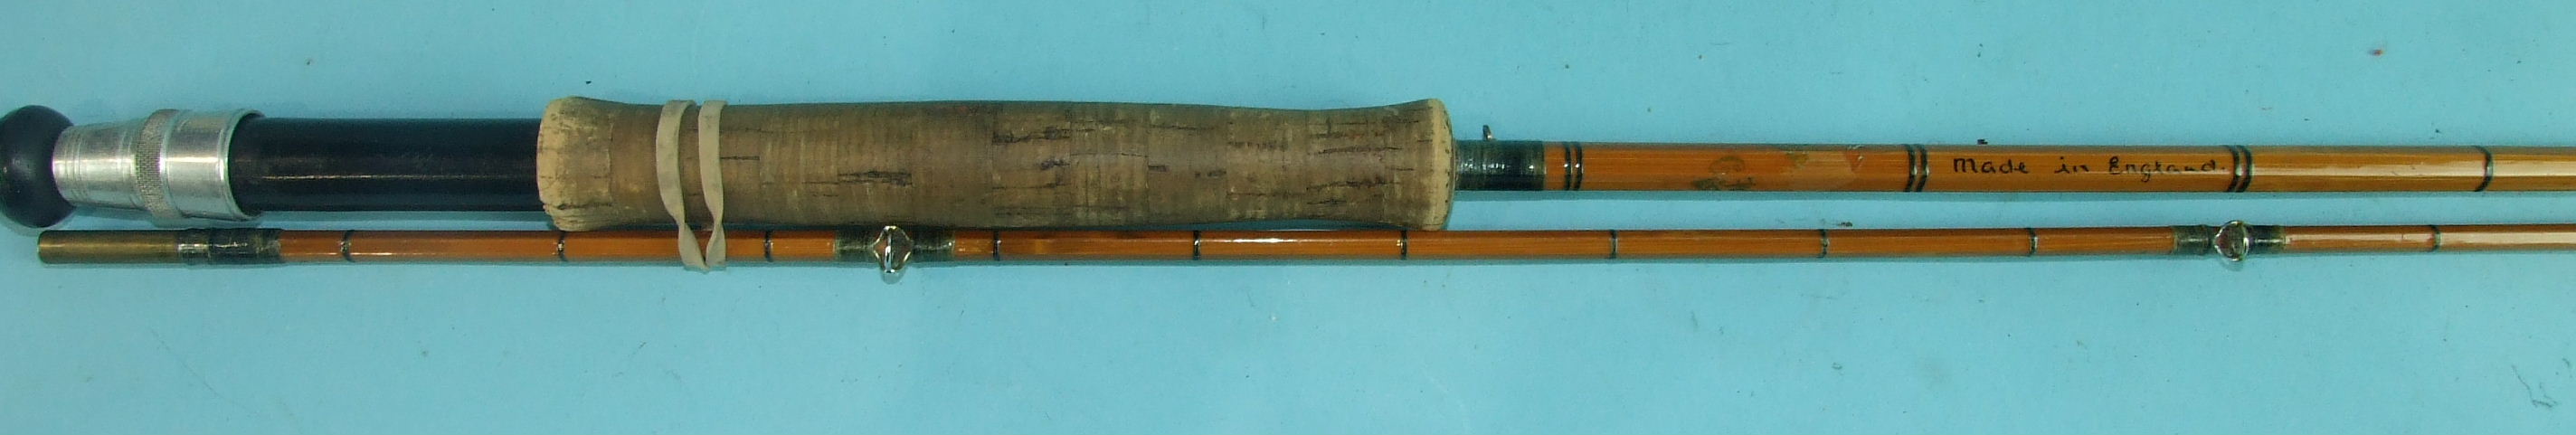 A Farlow & Co. 'Jubilee' 8ft 6-inch 2-piece split-cane trout rod. - Image 3 of 3